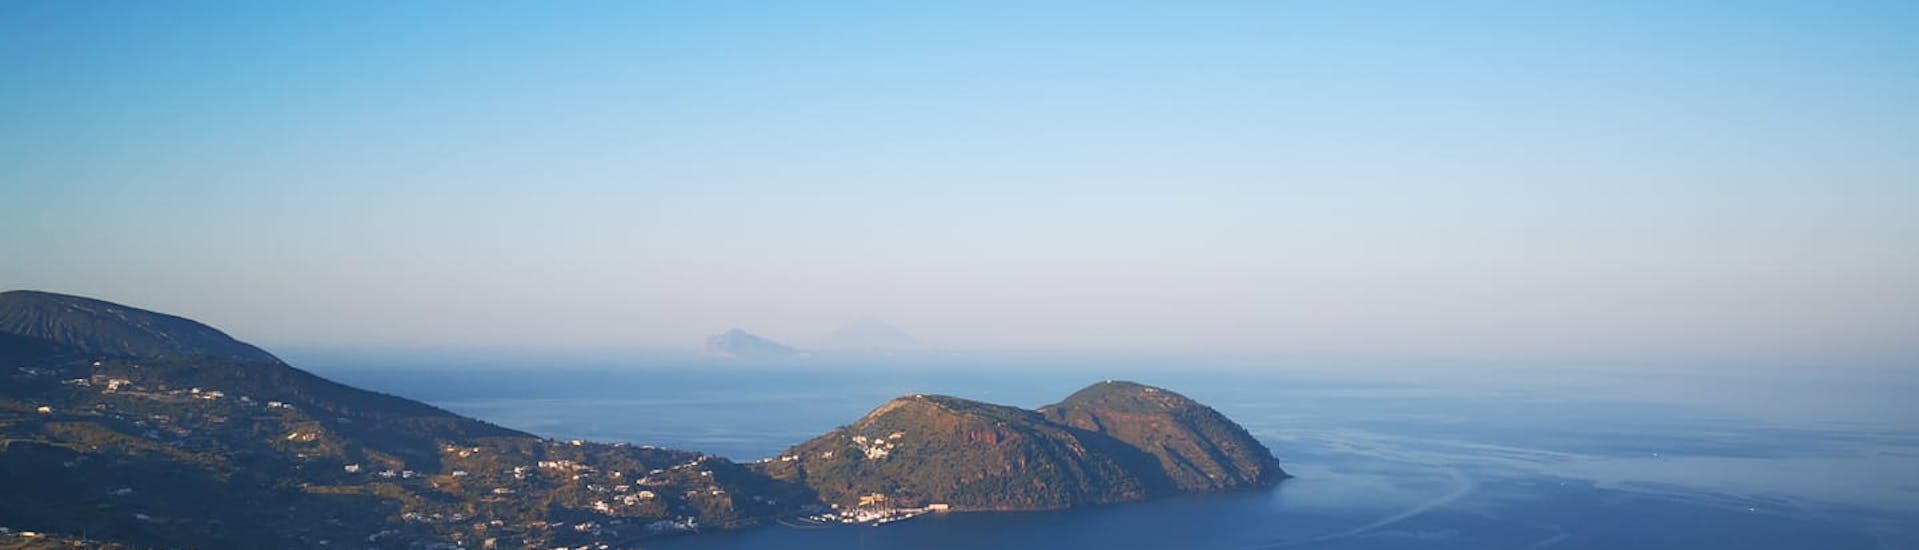 Picture of Lipari Island taken during the Boat Trip of the Islands of Lipari and Salina with Regina Eolie Navigazione.